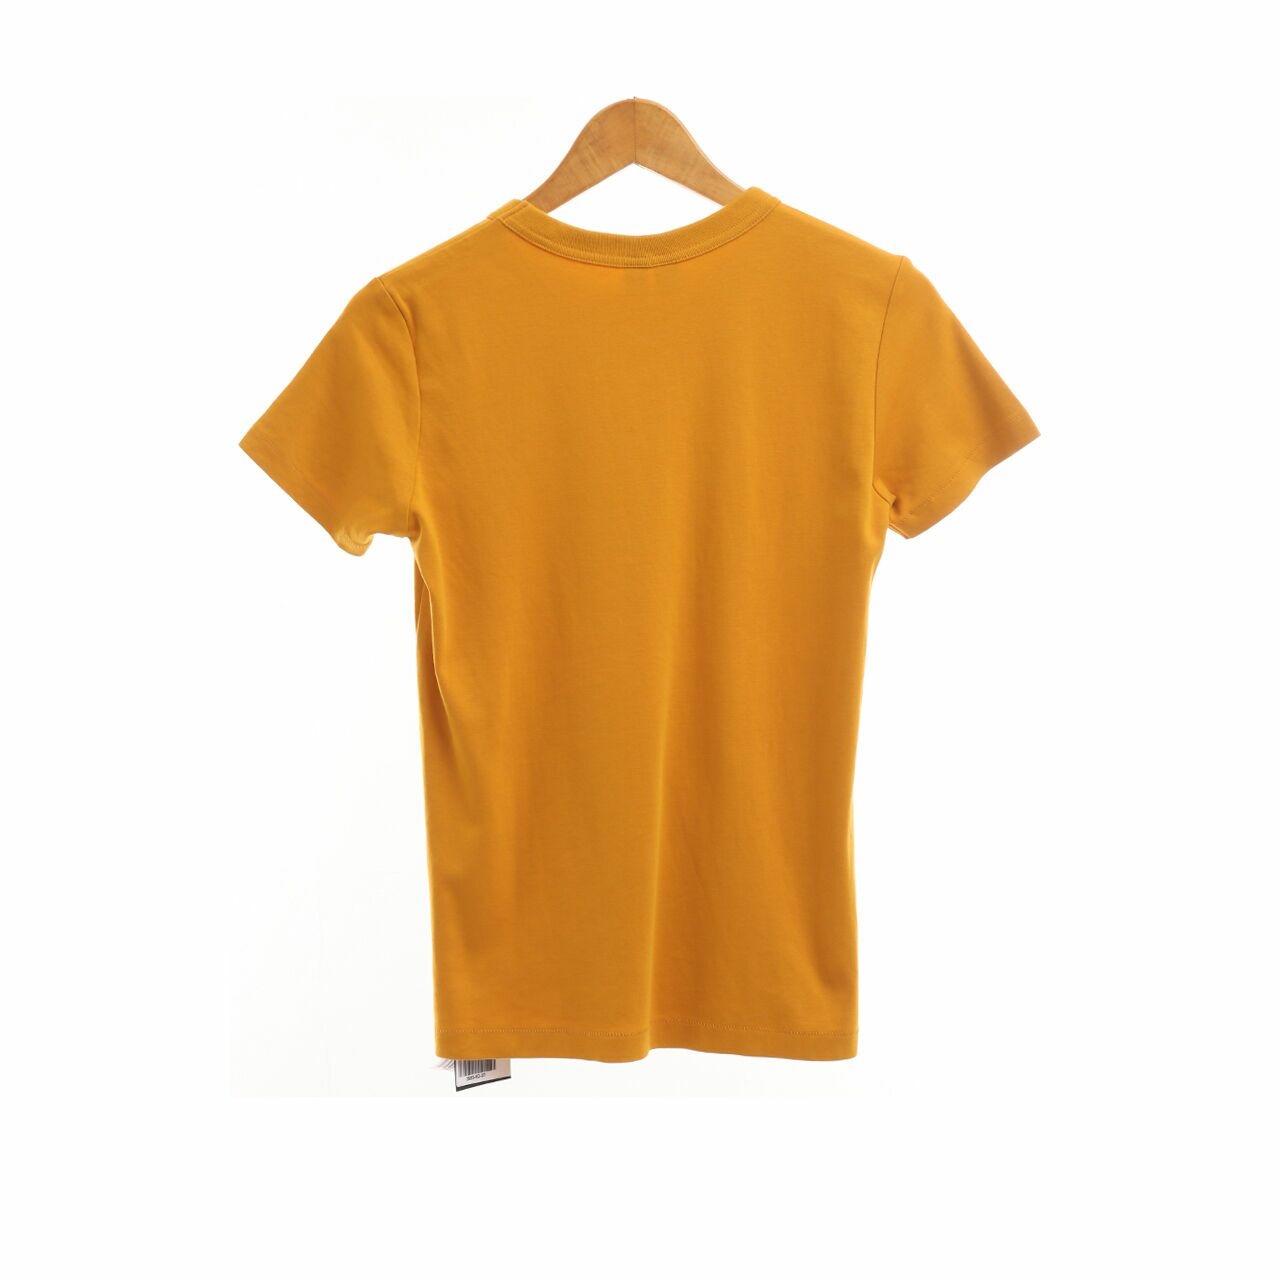 UNIQLO Mustard Tshirt 